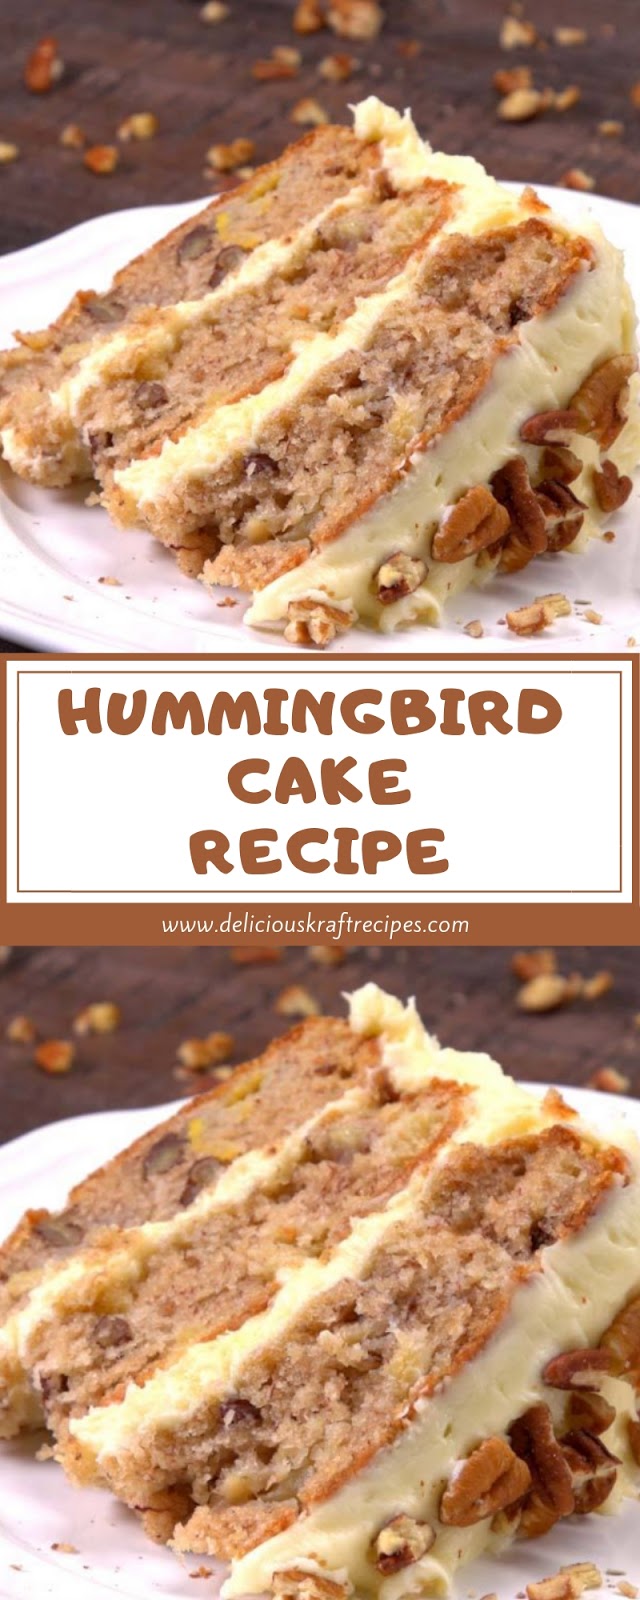 HUMMINGBIRD CAKE RECIPE